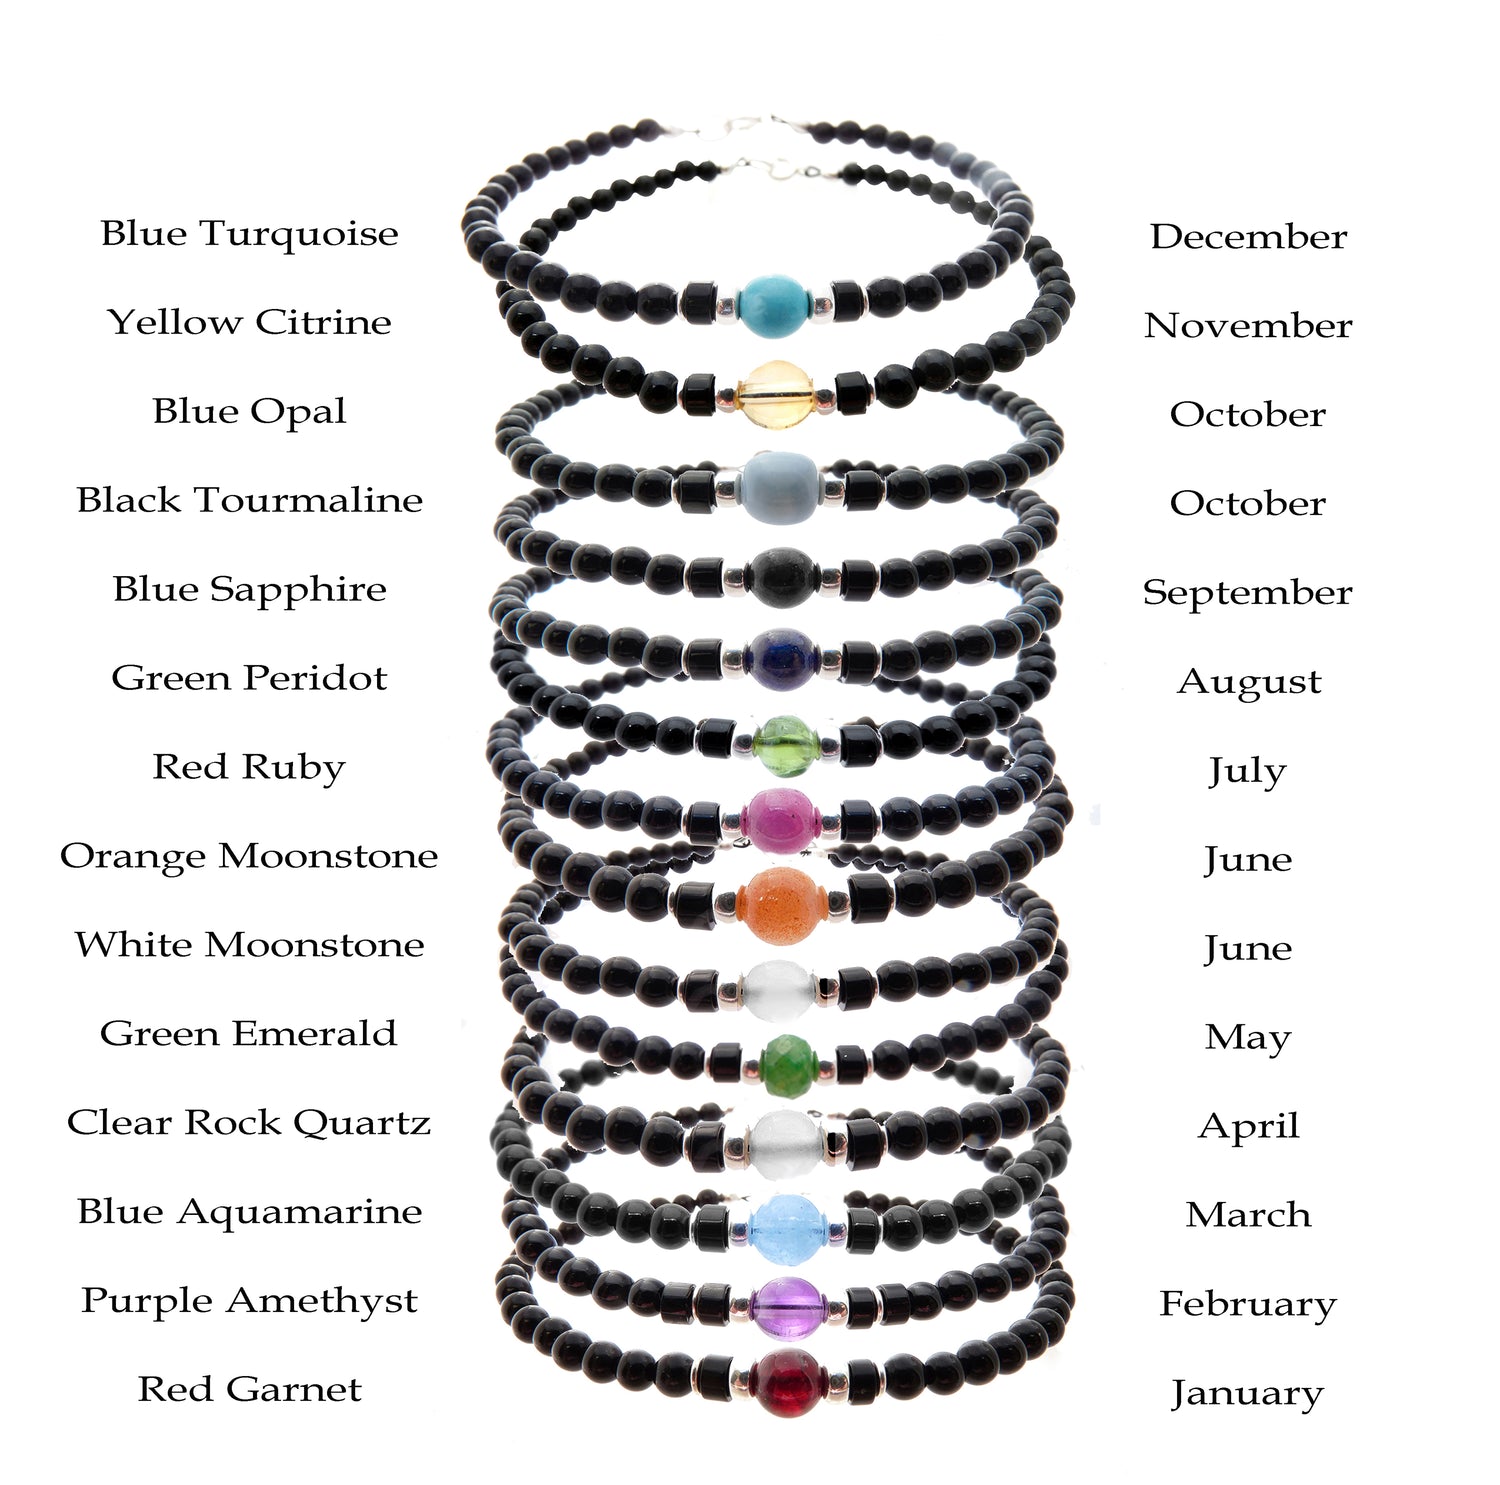 Handwoven Ribbon Necklace - Multicolor - Blue, Orange, Lavender, Silve